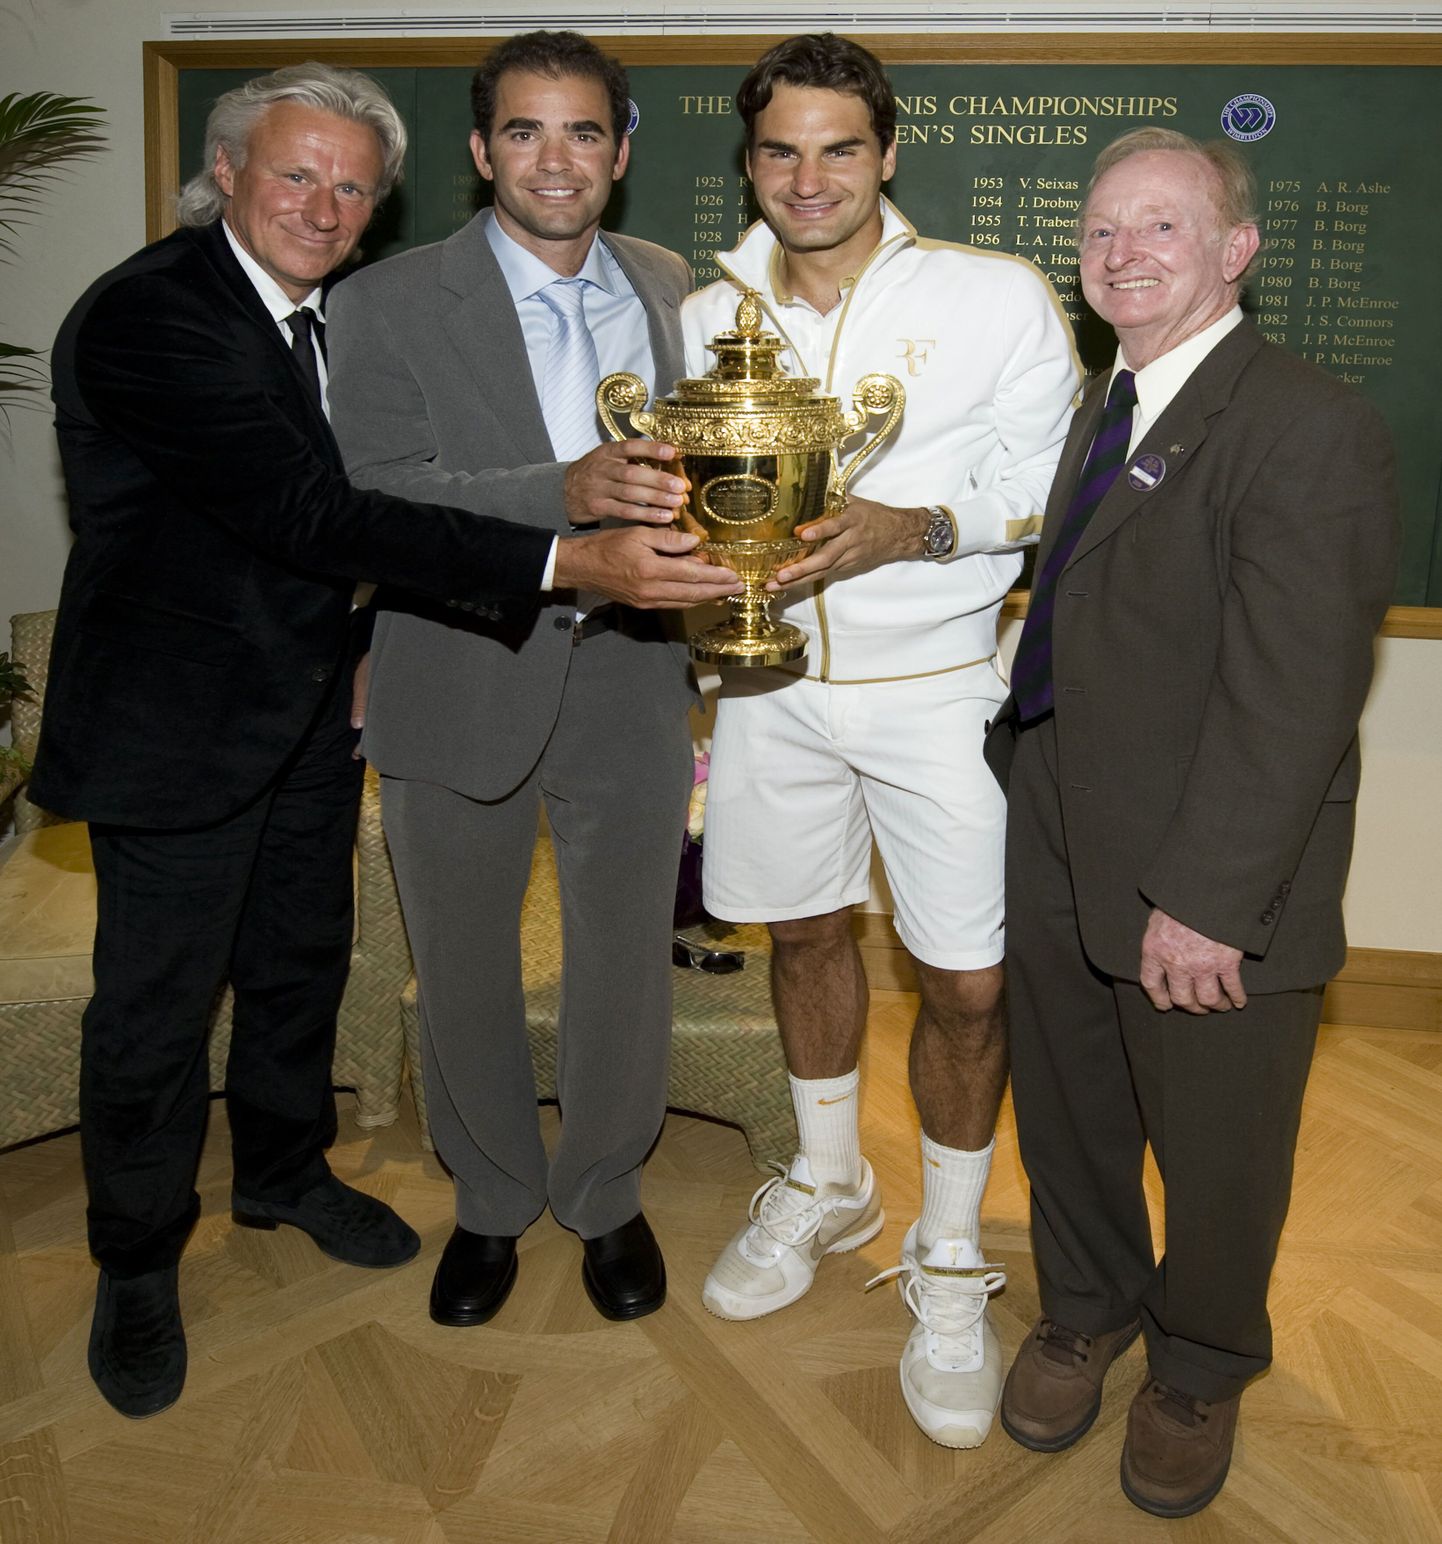 Roger Federer (paremalt teine) legendide keskel: Björn Borg (vasakult), Pete Sampras ja Rod Laver (paremal).